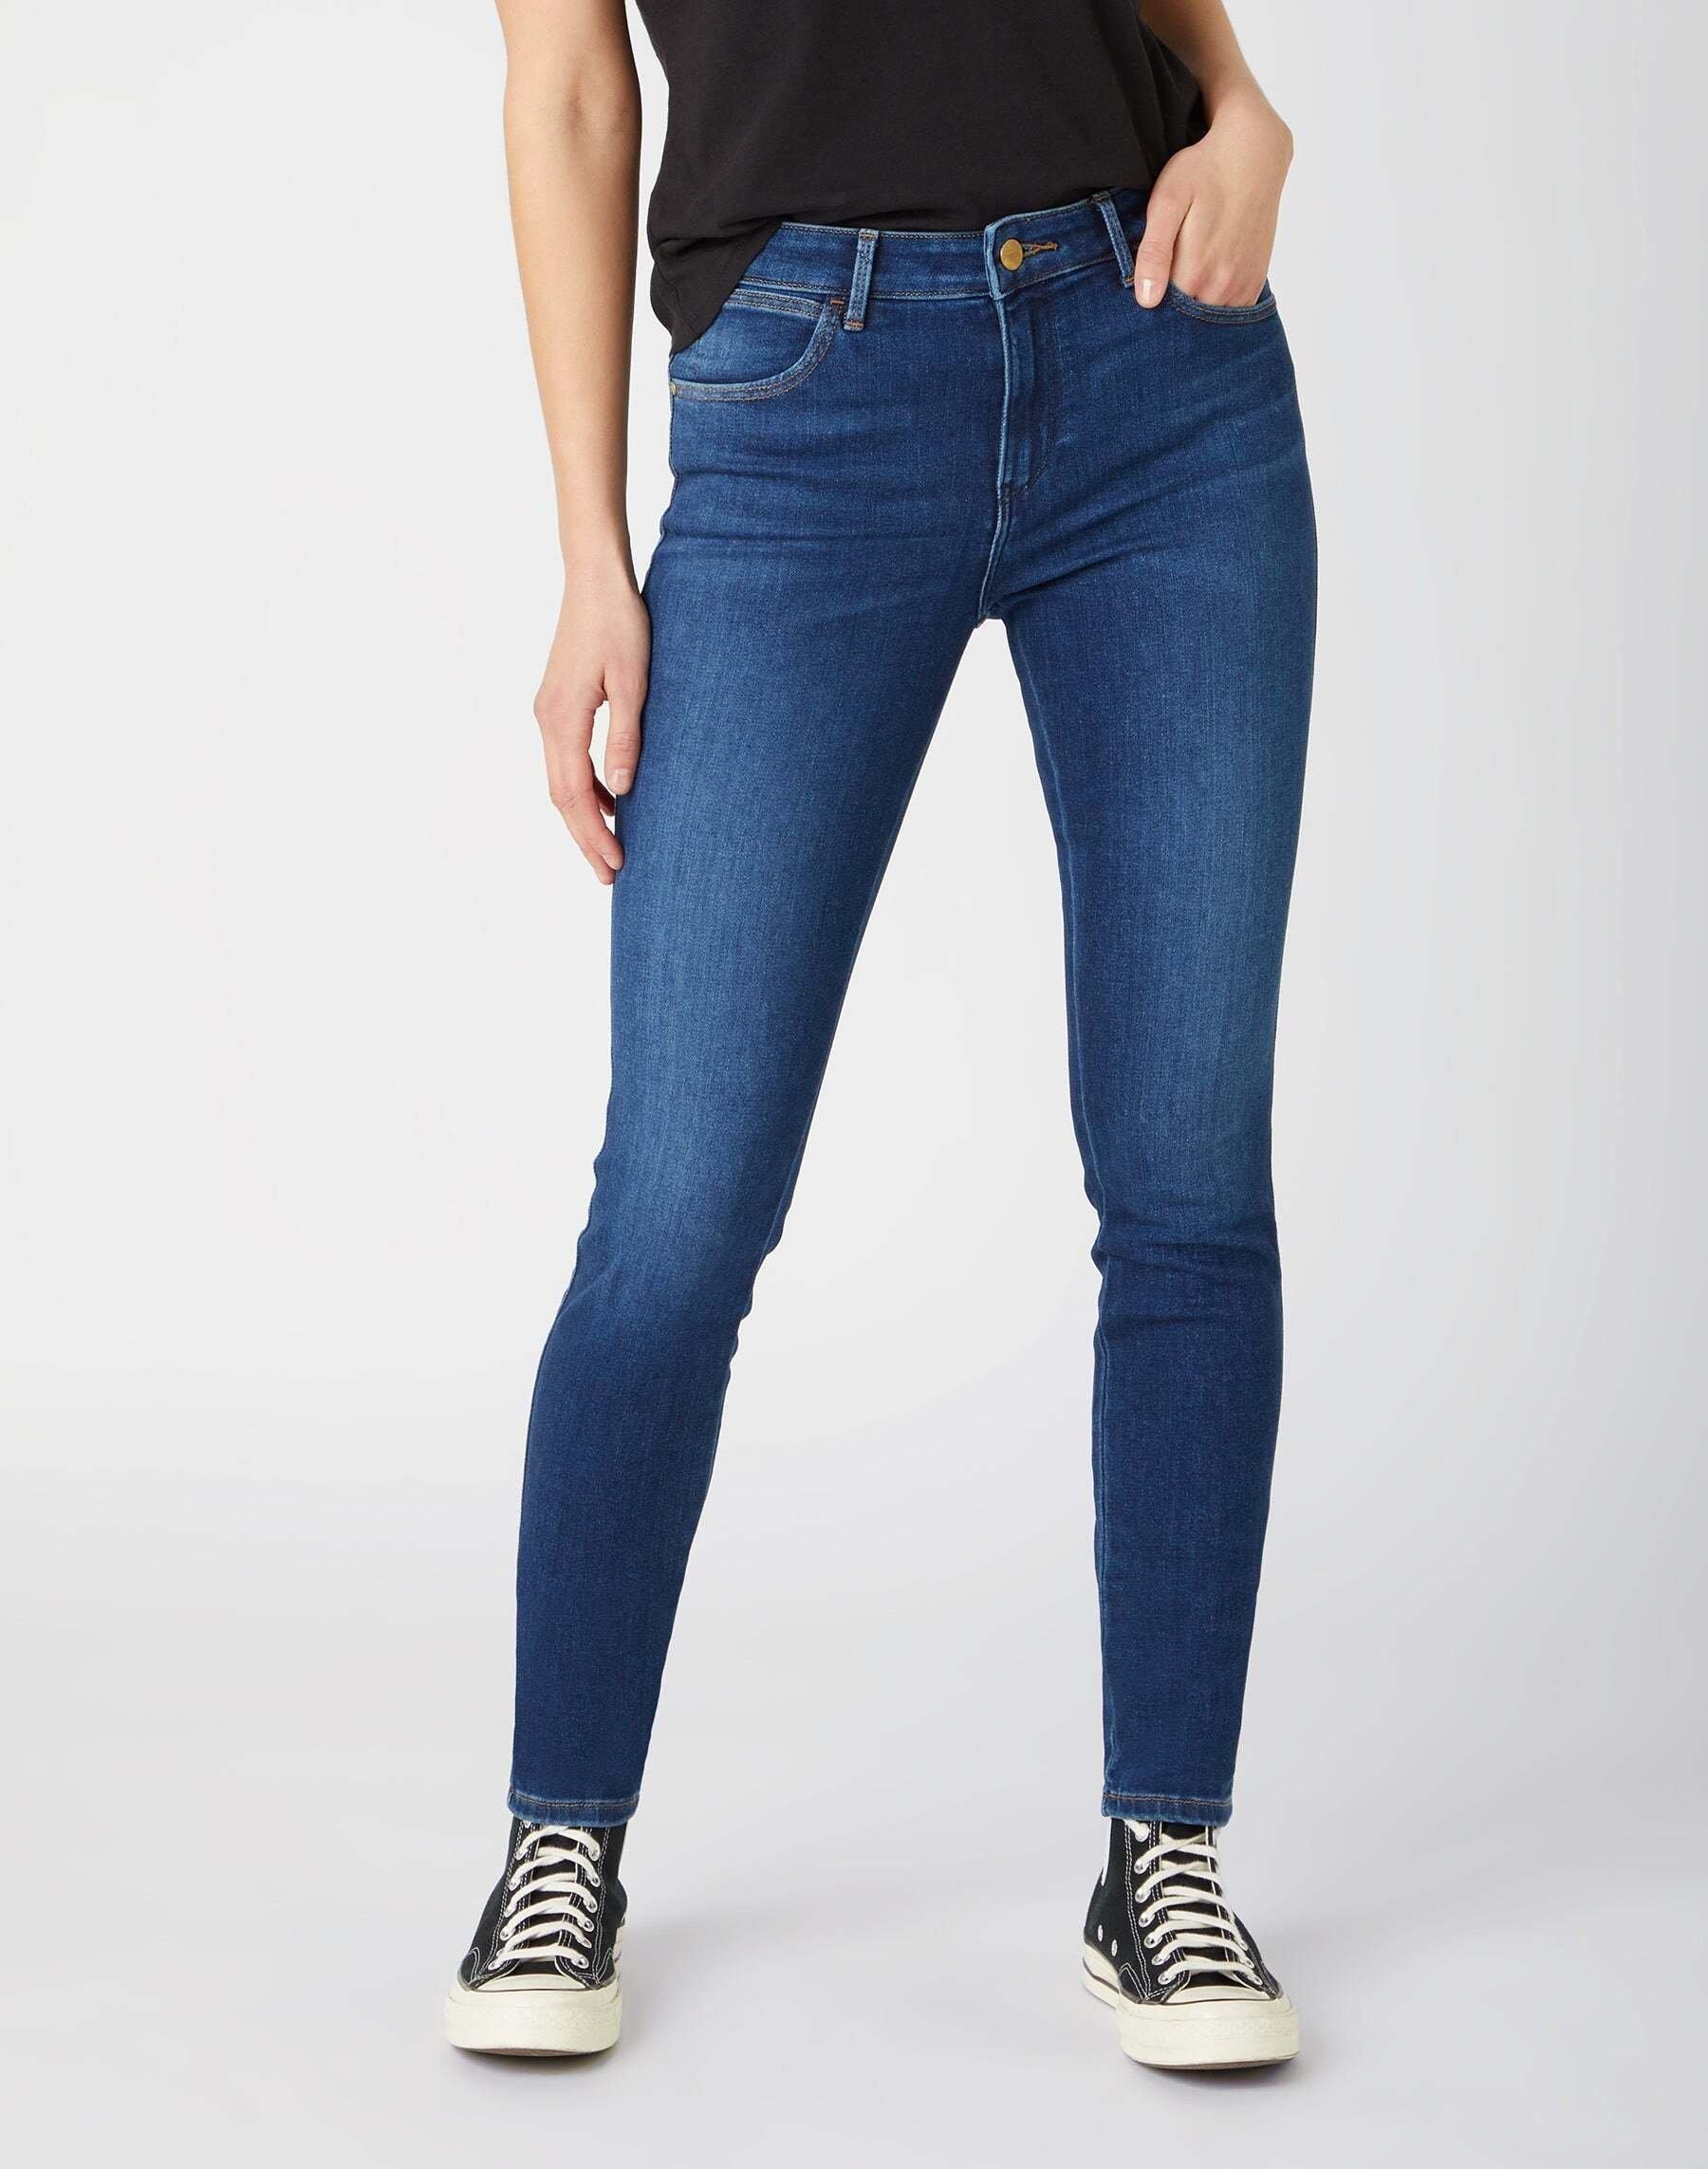 Jeans Skinny Fit Skinny Damen Blau Denim L32/W29 von Wrangler